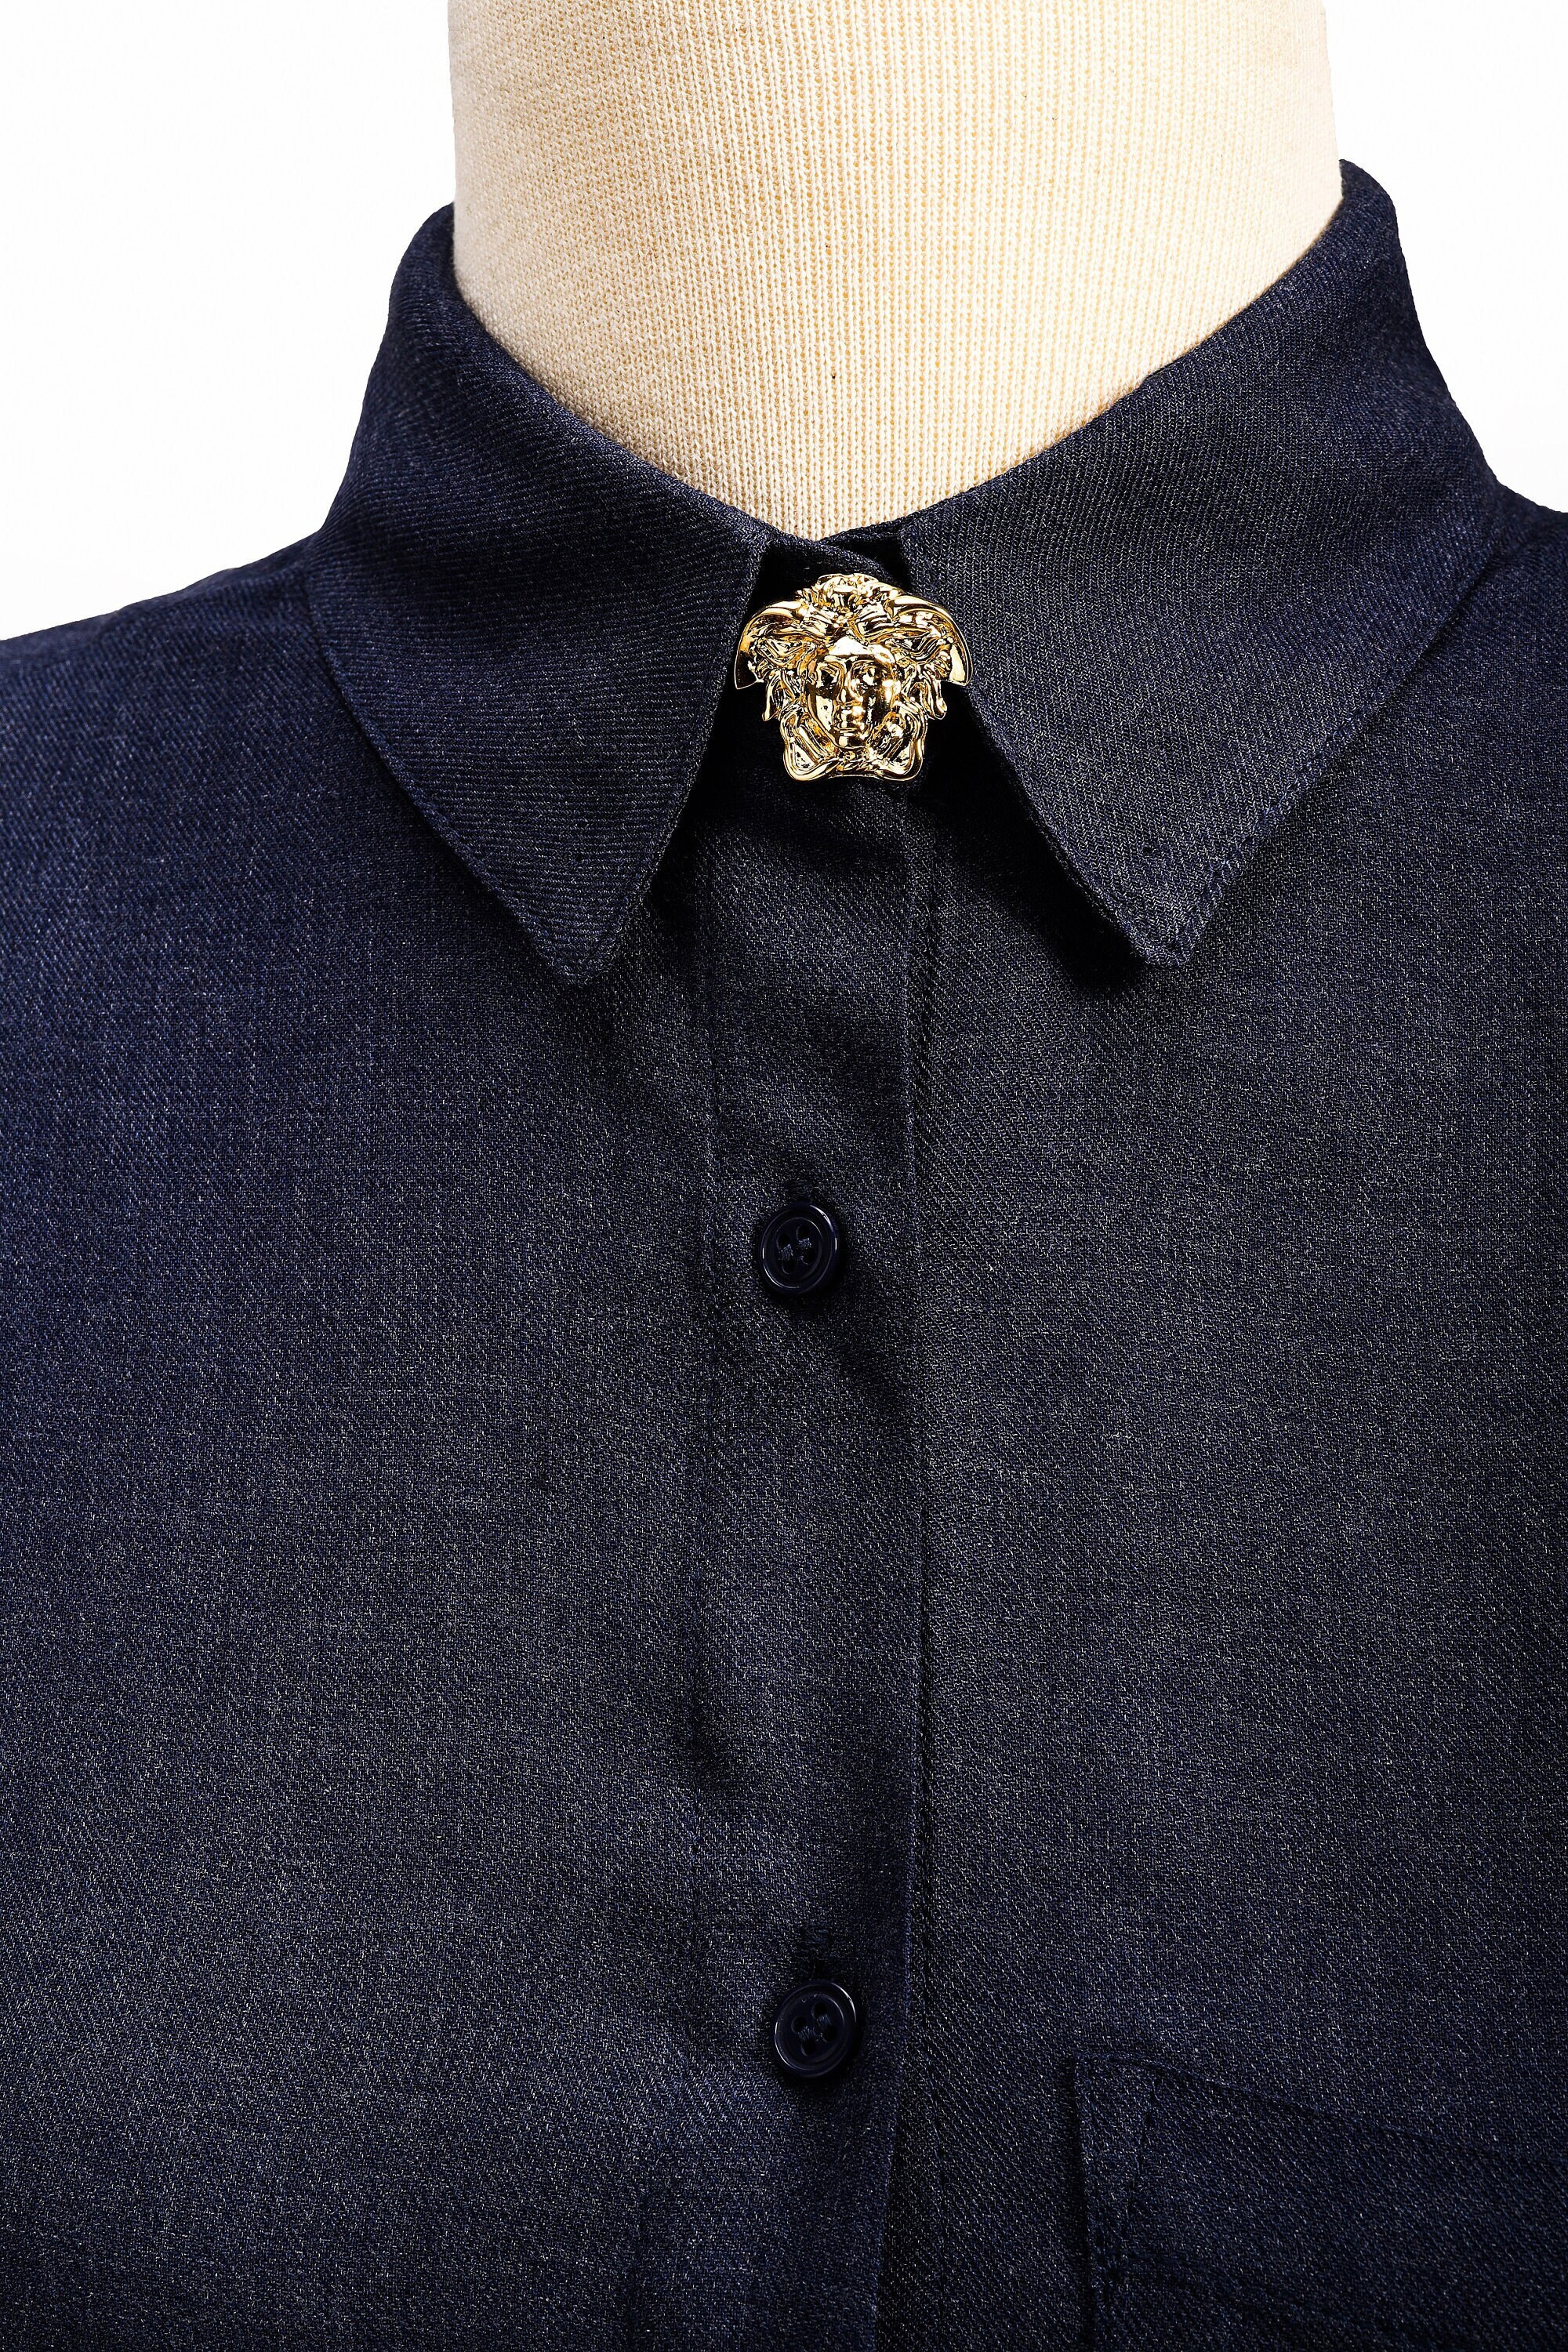 CoolWomenClub Gold Handmade Shirt Button Cover Brooch, Button Pin, Shirt Jewelry for Women, Collar Brooch